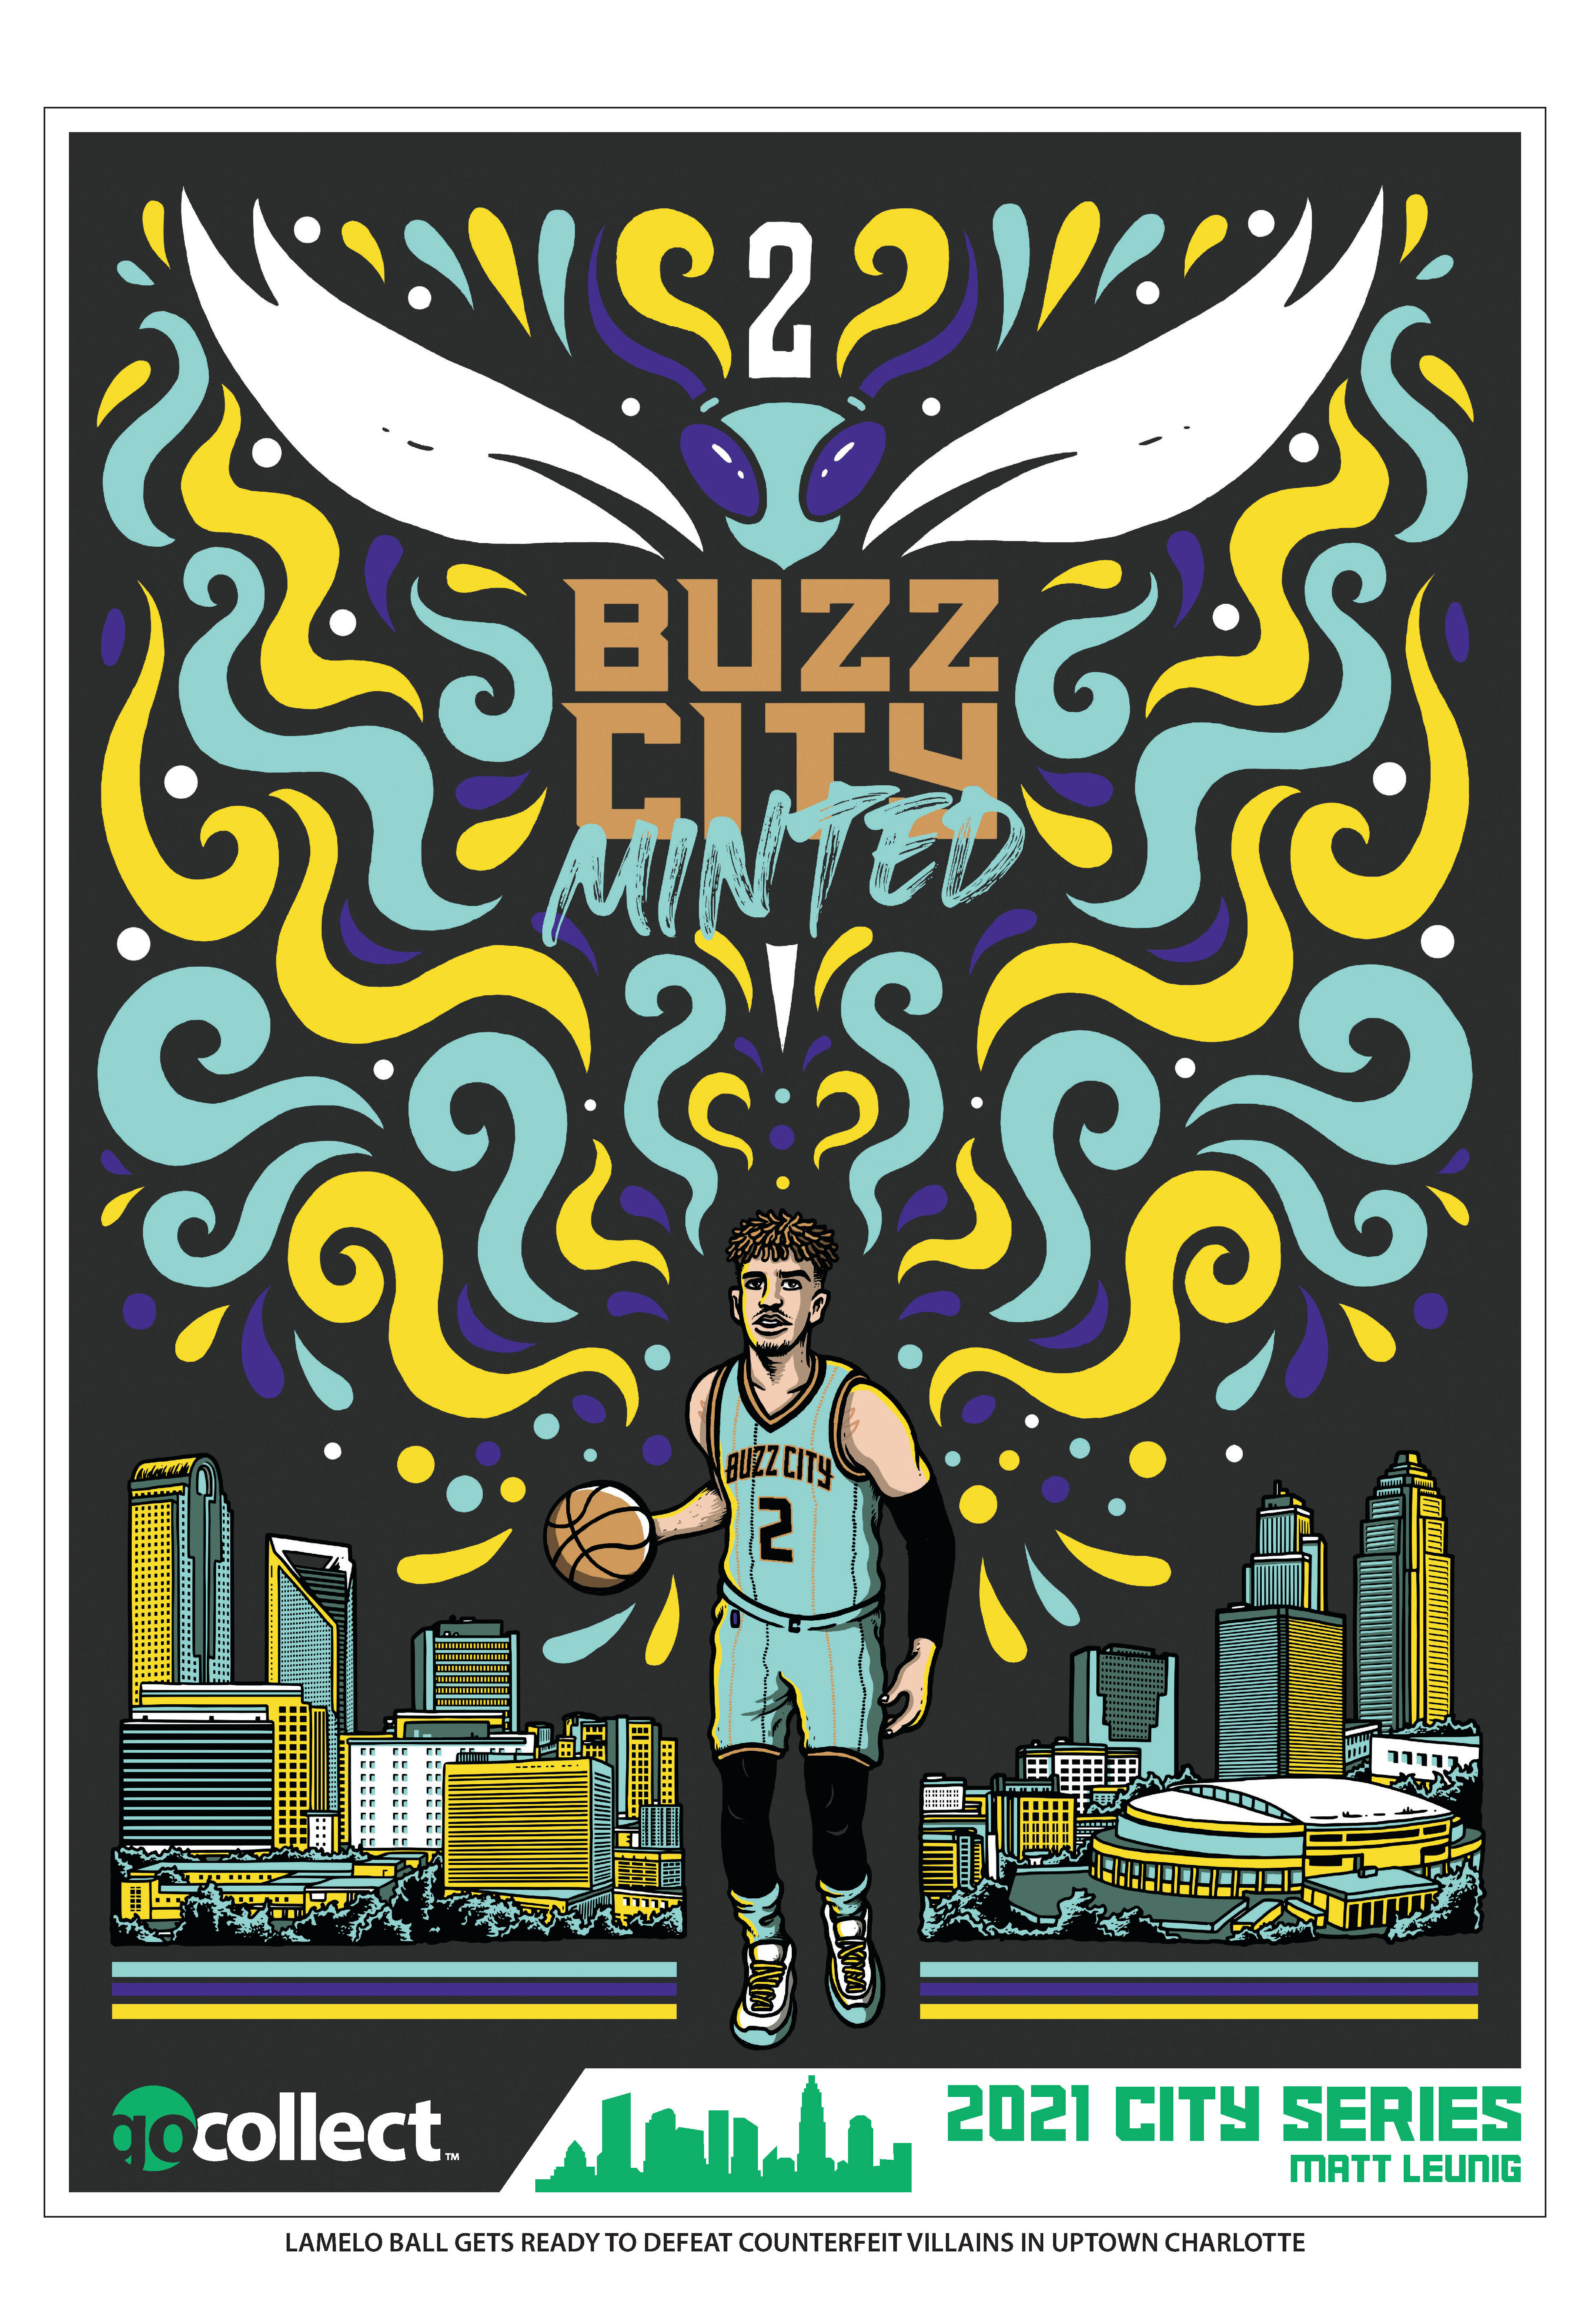 gocollect-hornets-buzz-city-poster